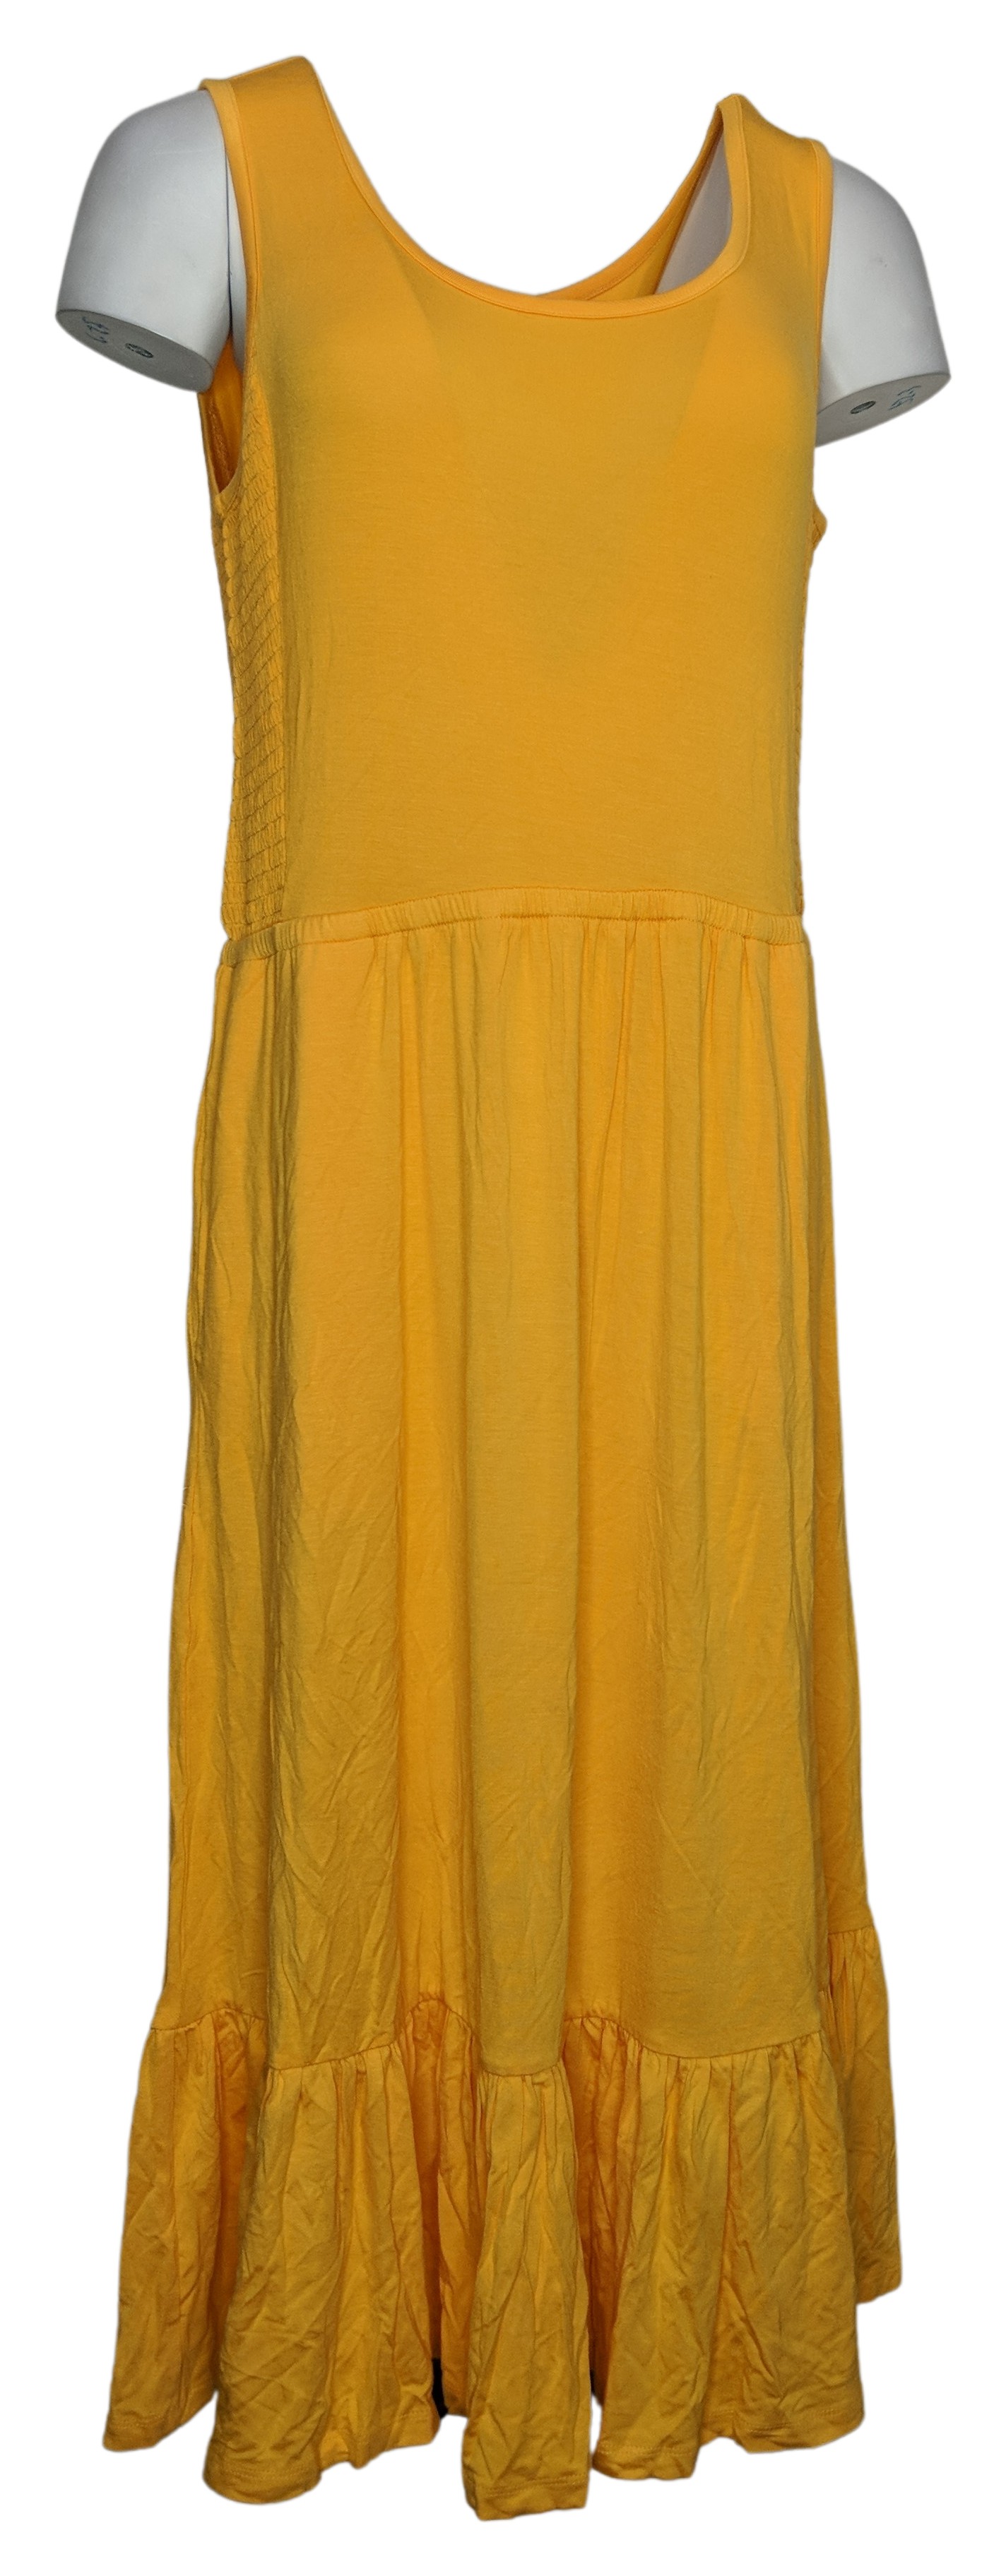 J Jason Wu Solid or Tie Dye Knit Ruffle Midi Dress Women's Sz M Yellow